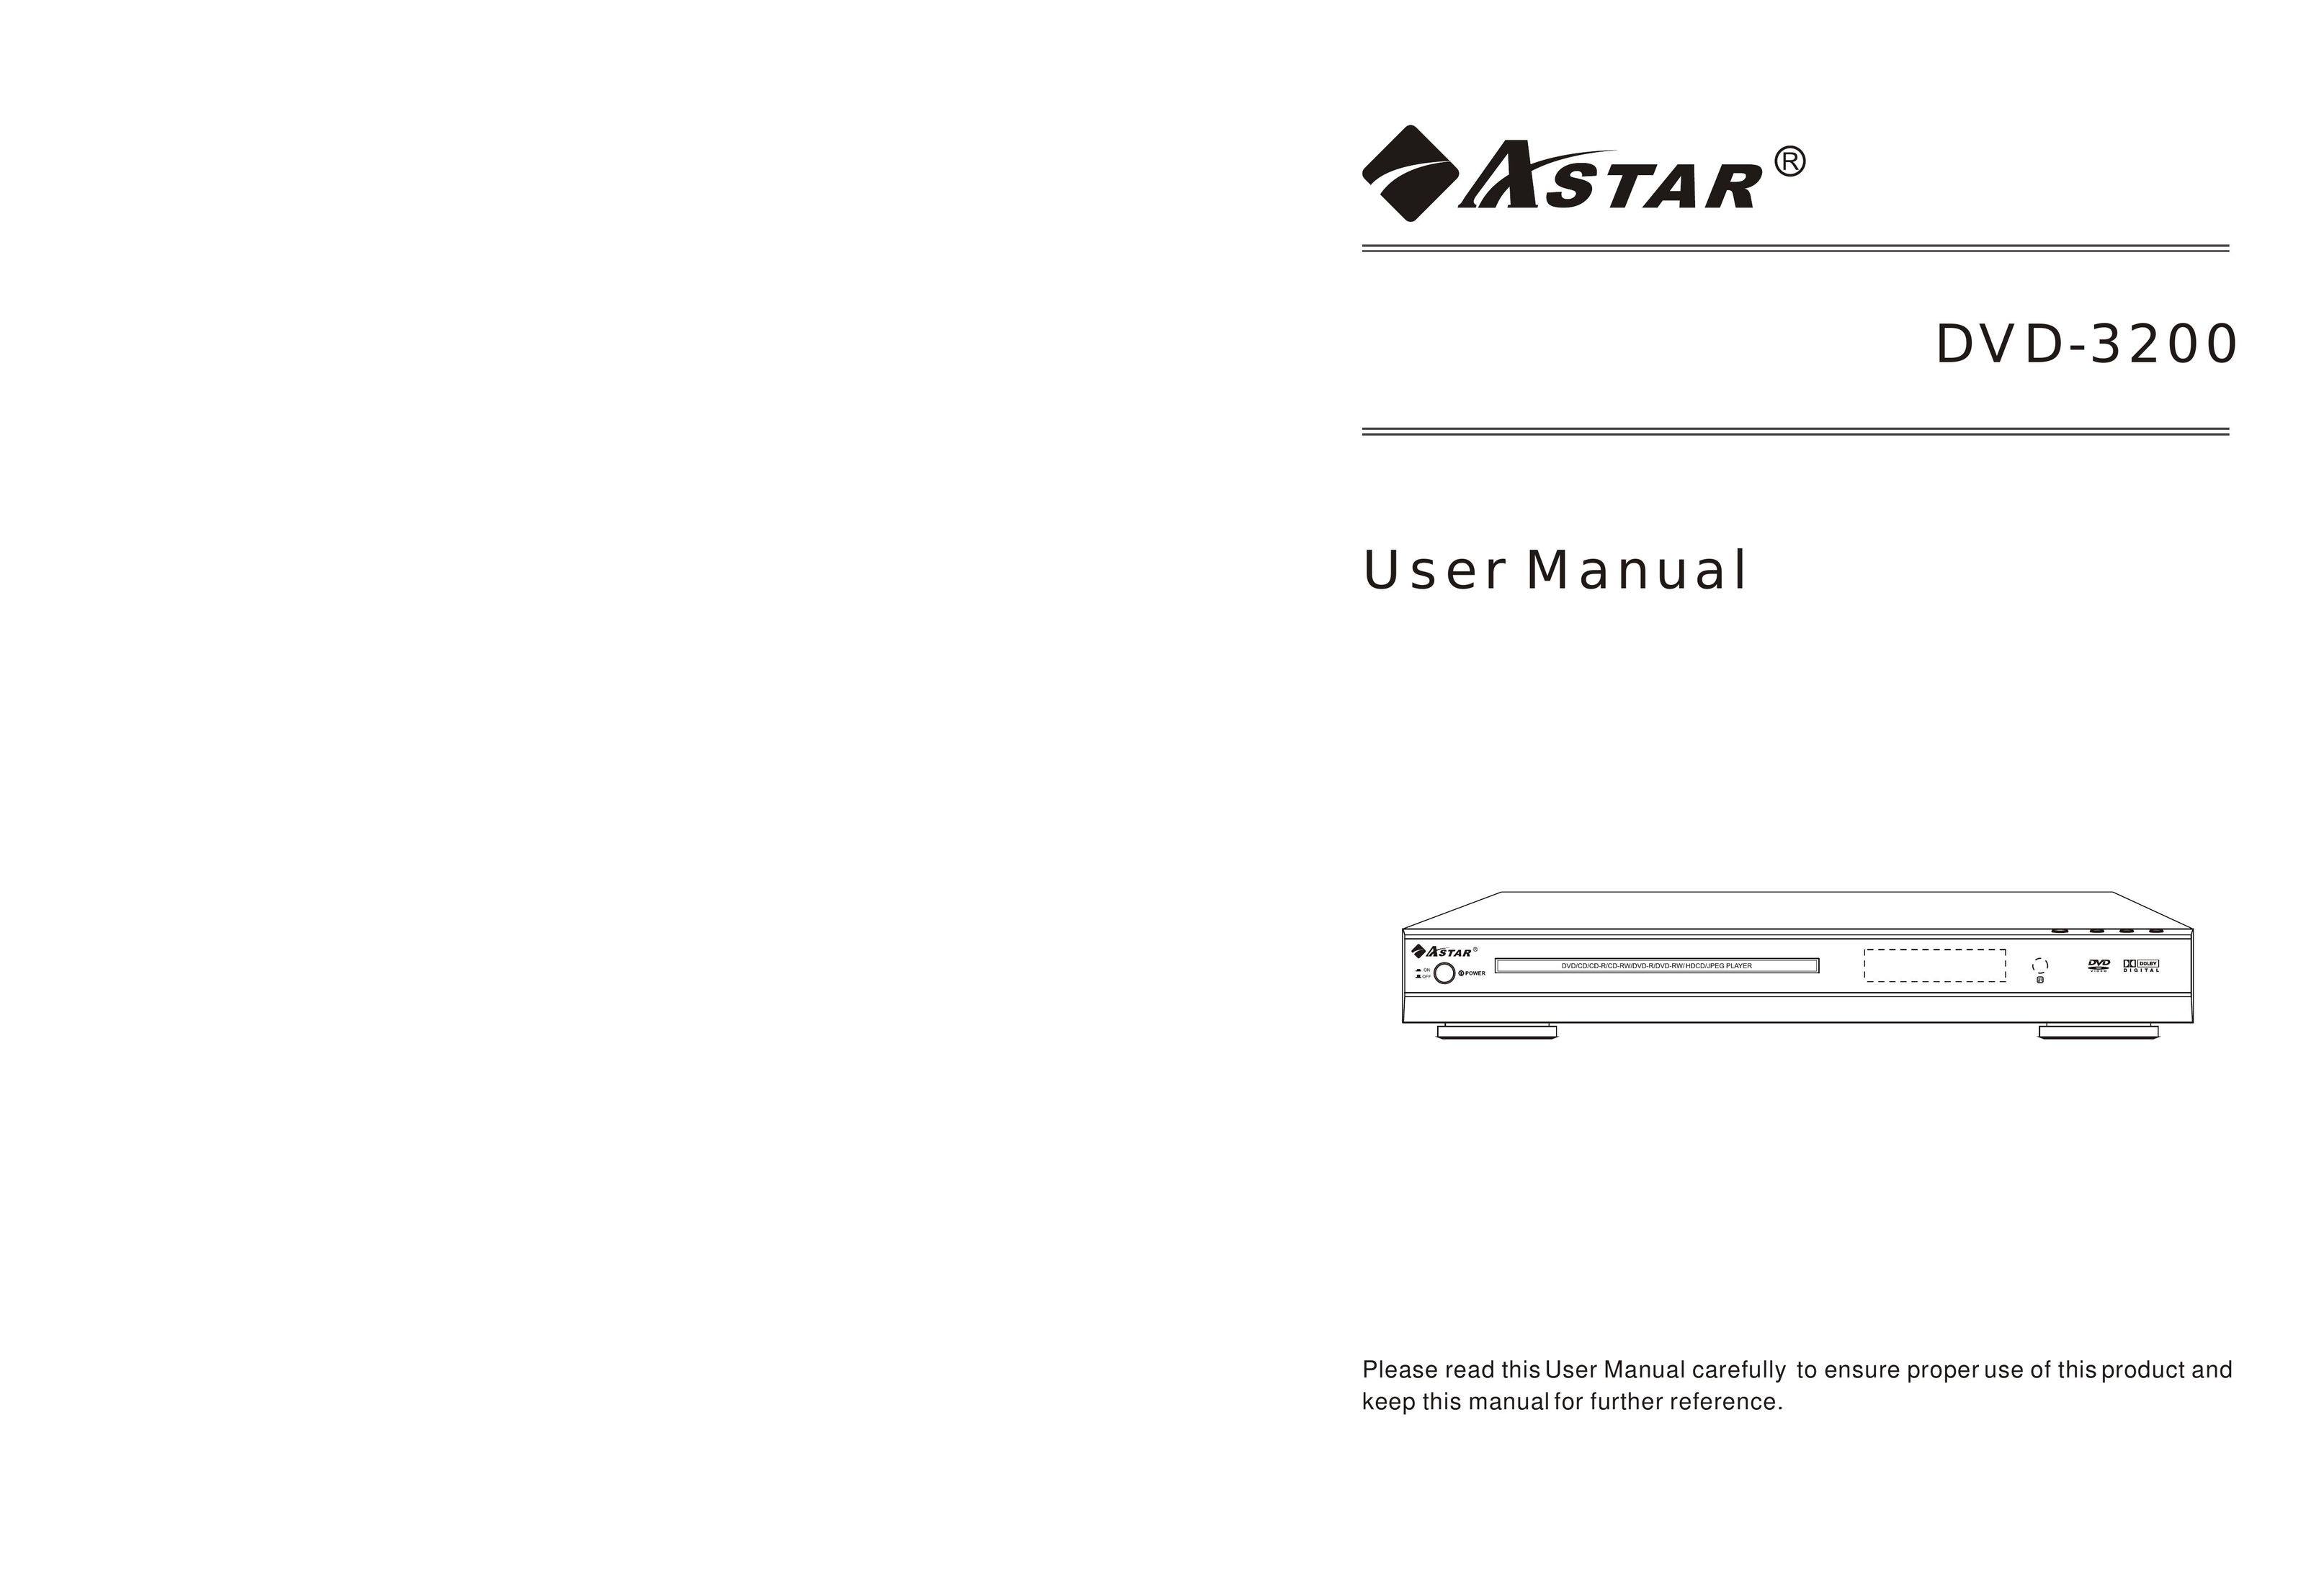 Astar electronic DVD-3200 DVD Player User Manual